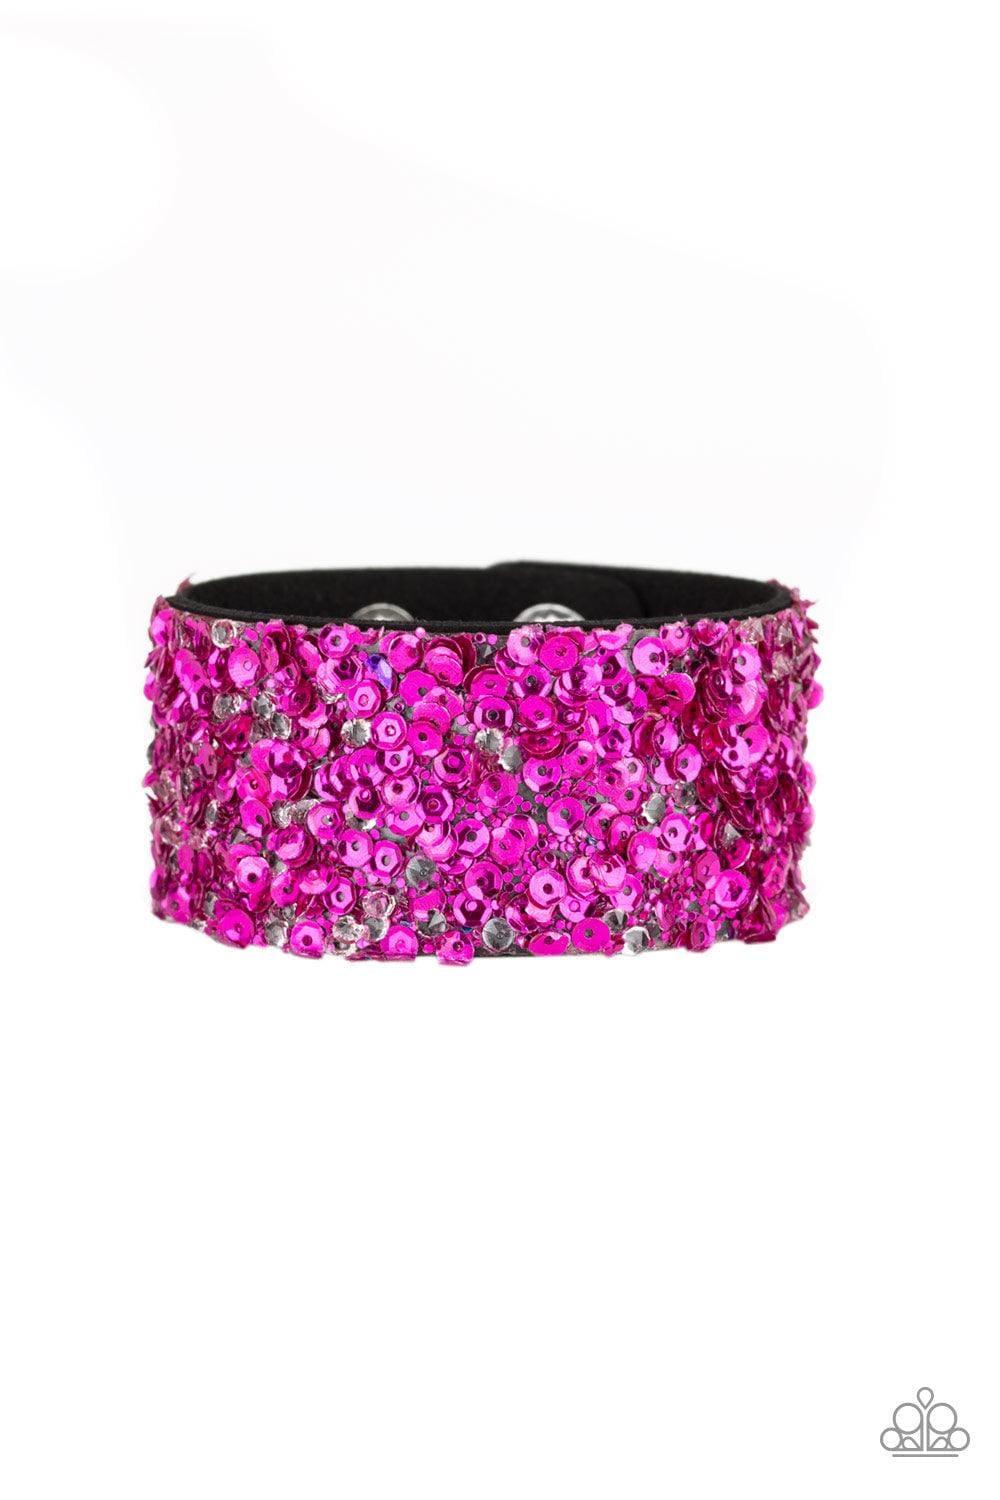 Paparazzi Accessories - Starry Sequins - Pink Snap Bracelet - Bling by JessieK